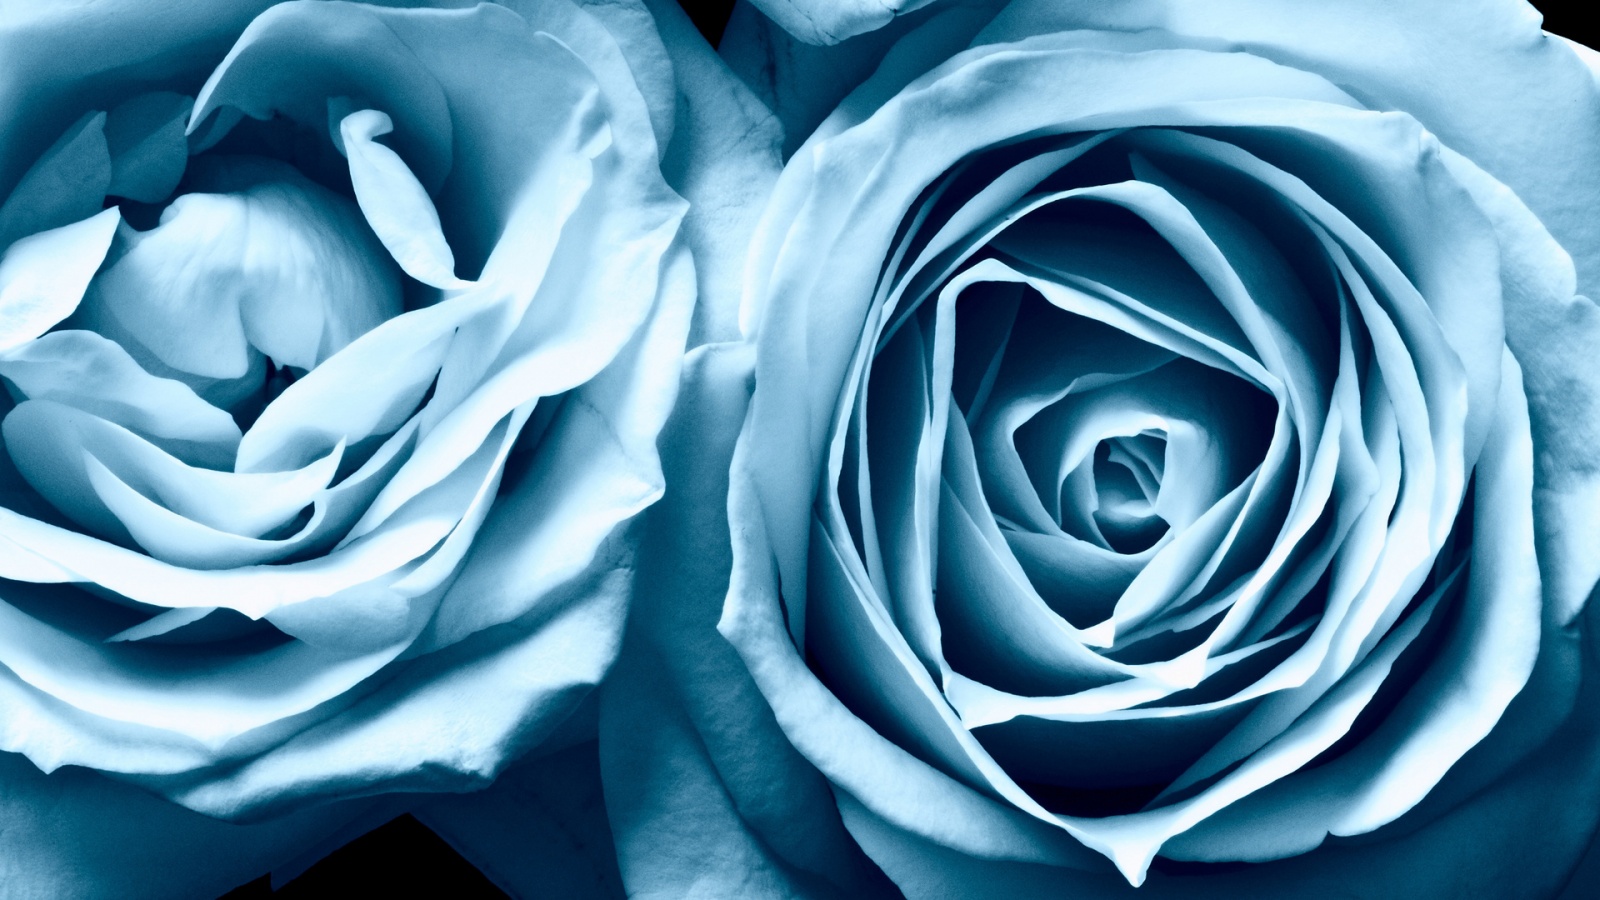 Wallpaper Berukuran Besar Burung Cendrawasih Mahkota - Light Blue Roses - HD Wallpaper 